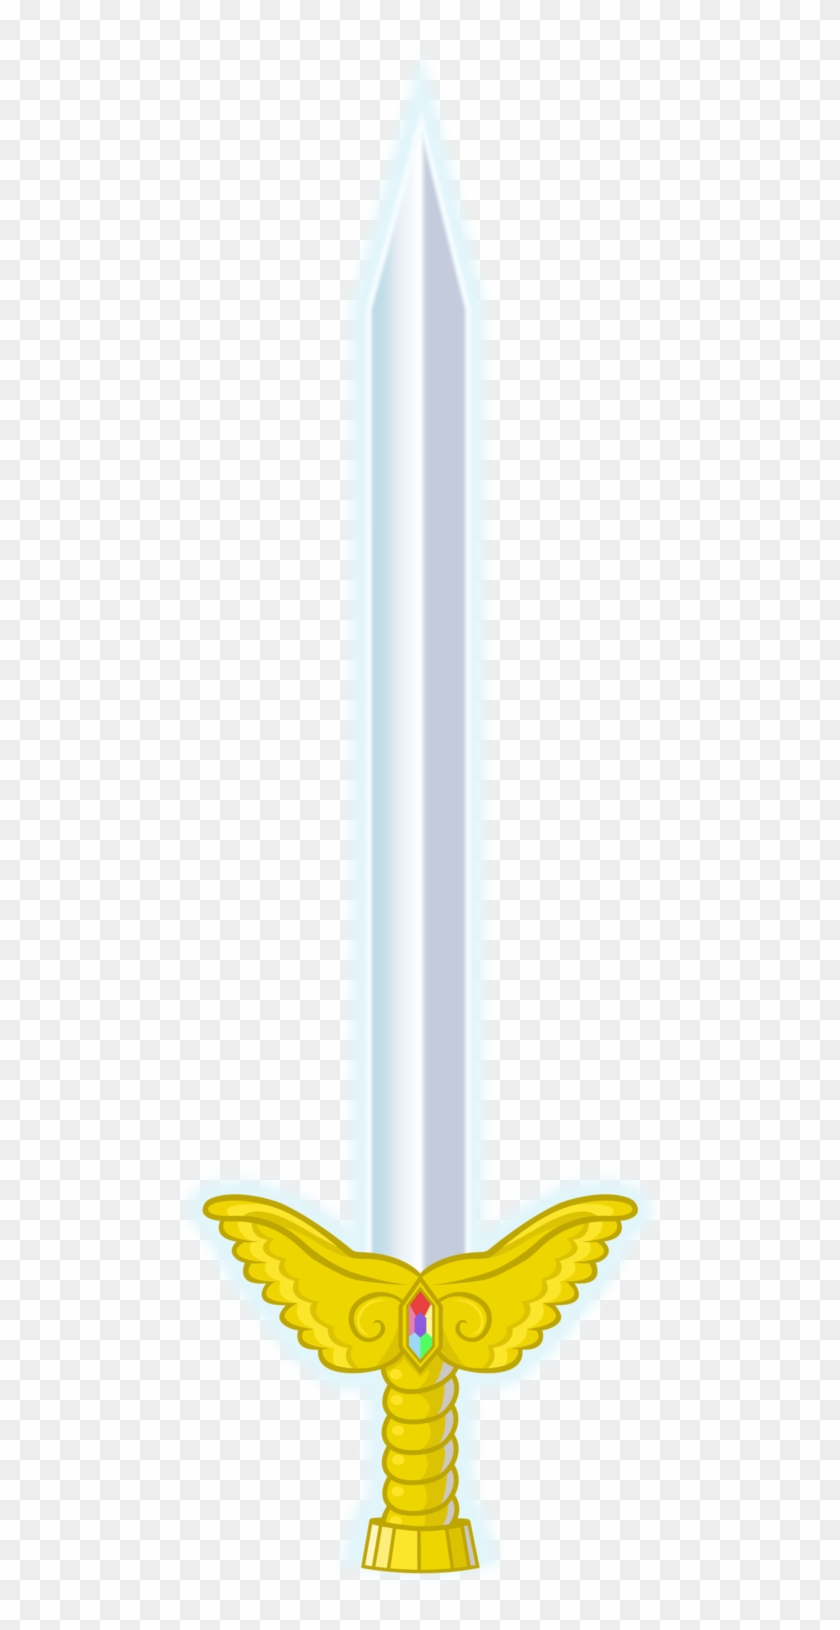 sword of the spirit clip art